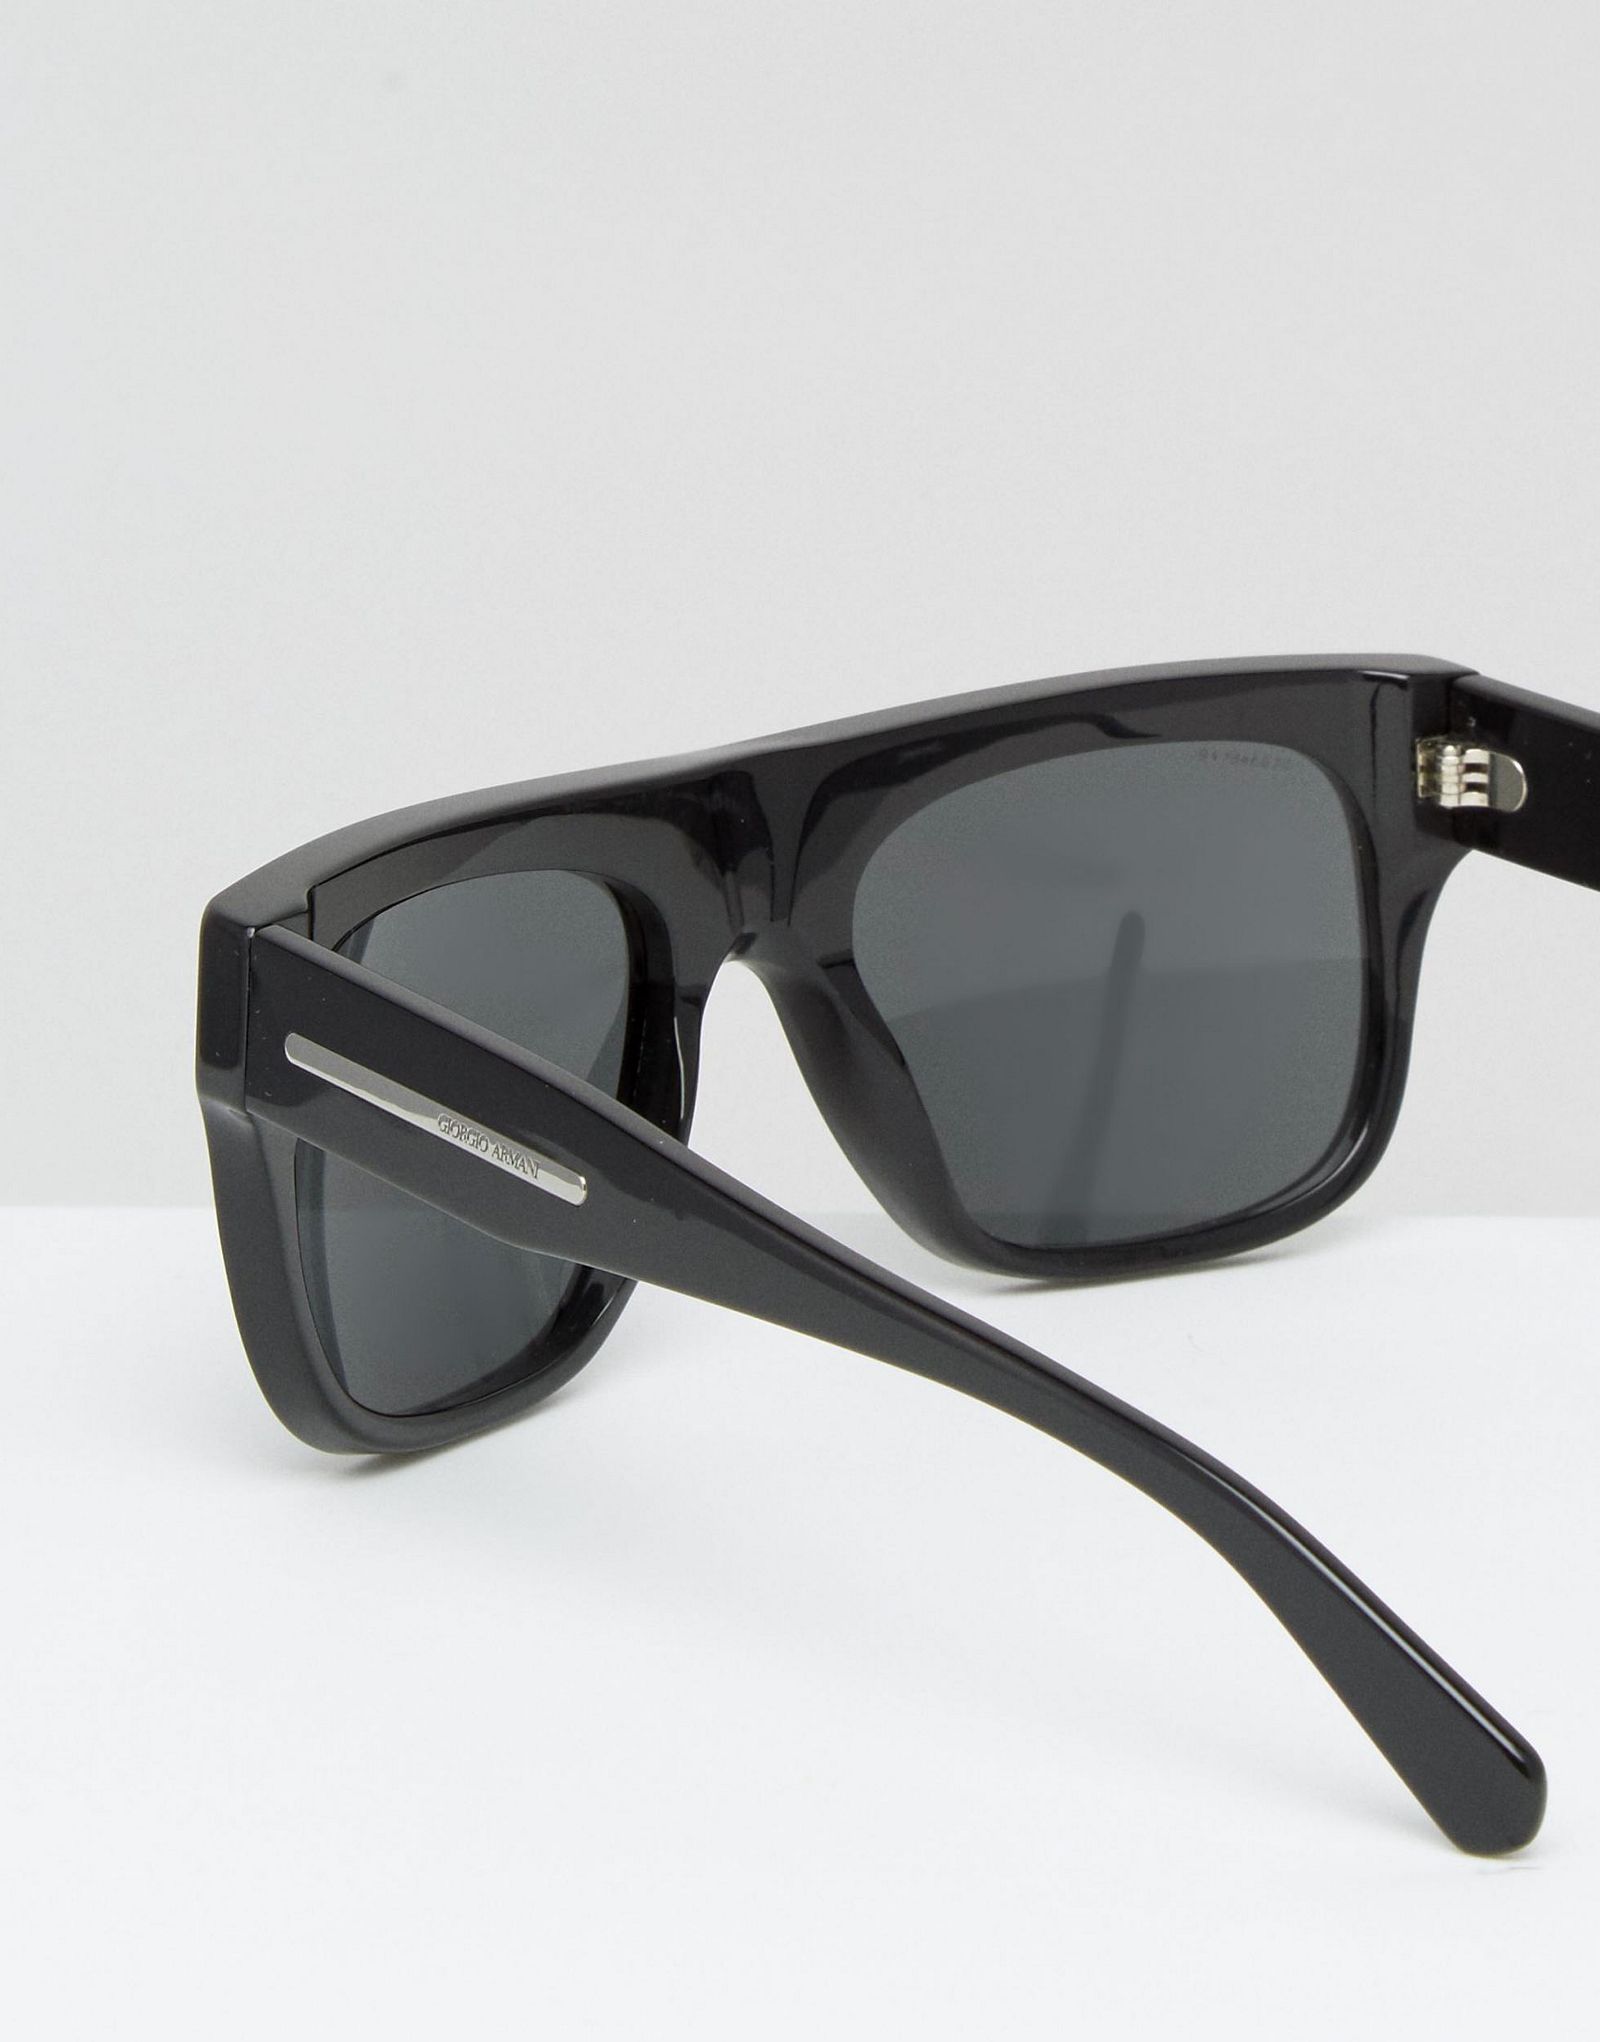 Giorgio Armani Flat Brow Sunglasses Black